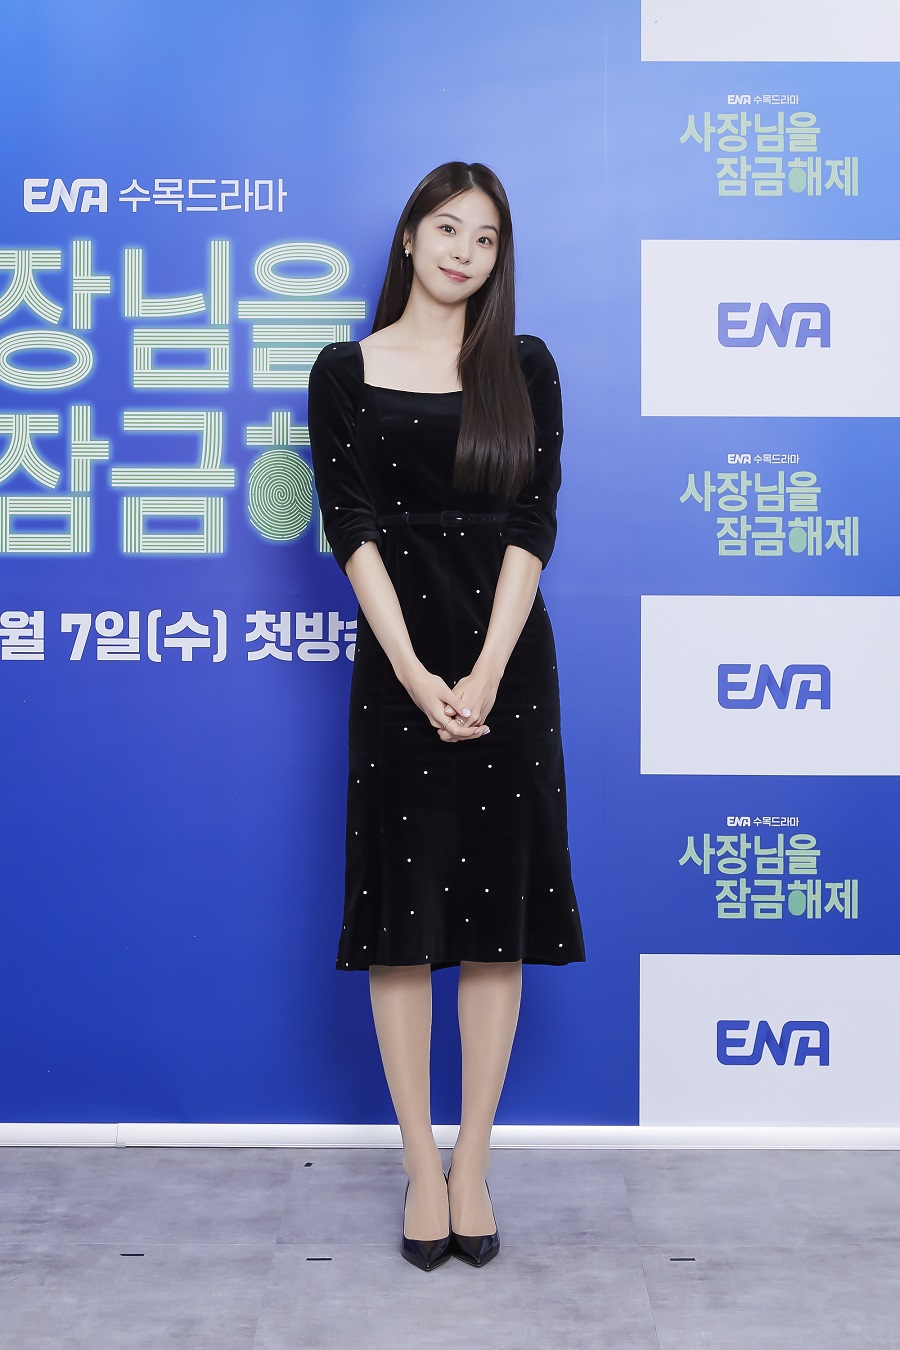 ▲ ENA 새 드라마 '사장님을 잠금해제' 제작발표회에 참석한 배우 서은수. 제공| ENA